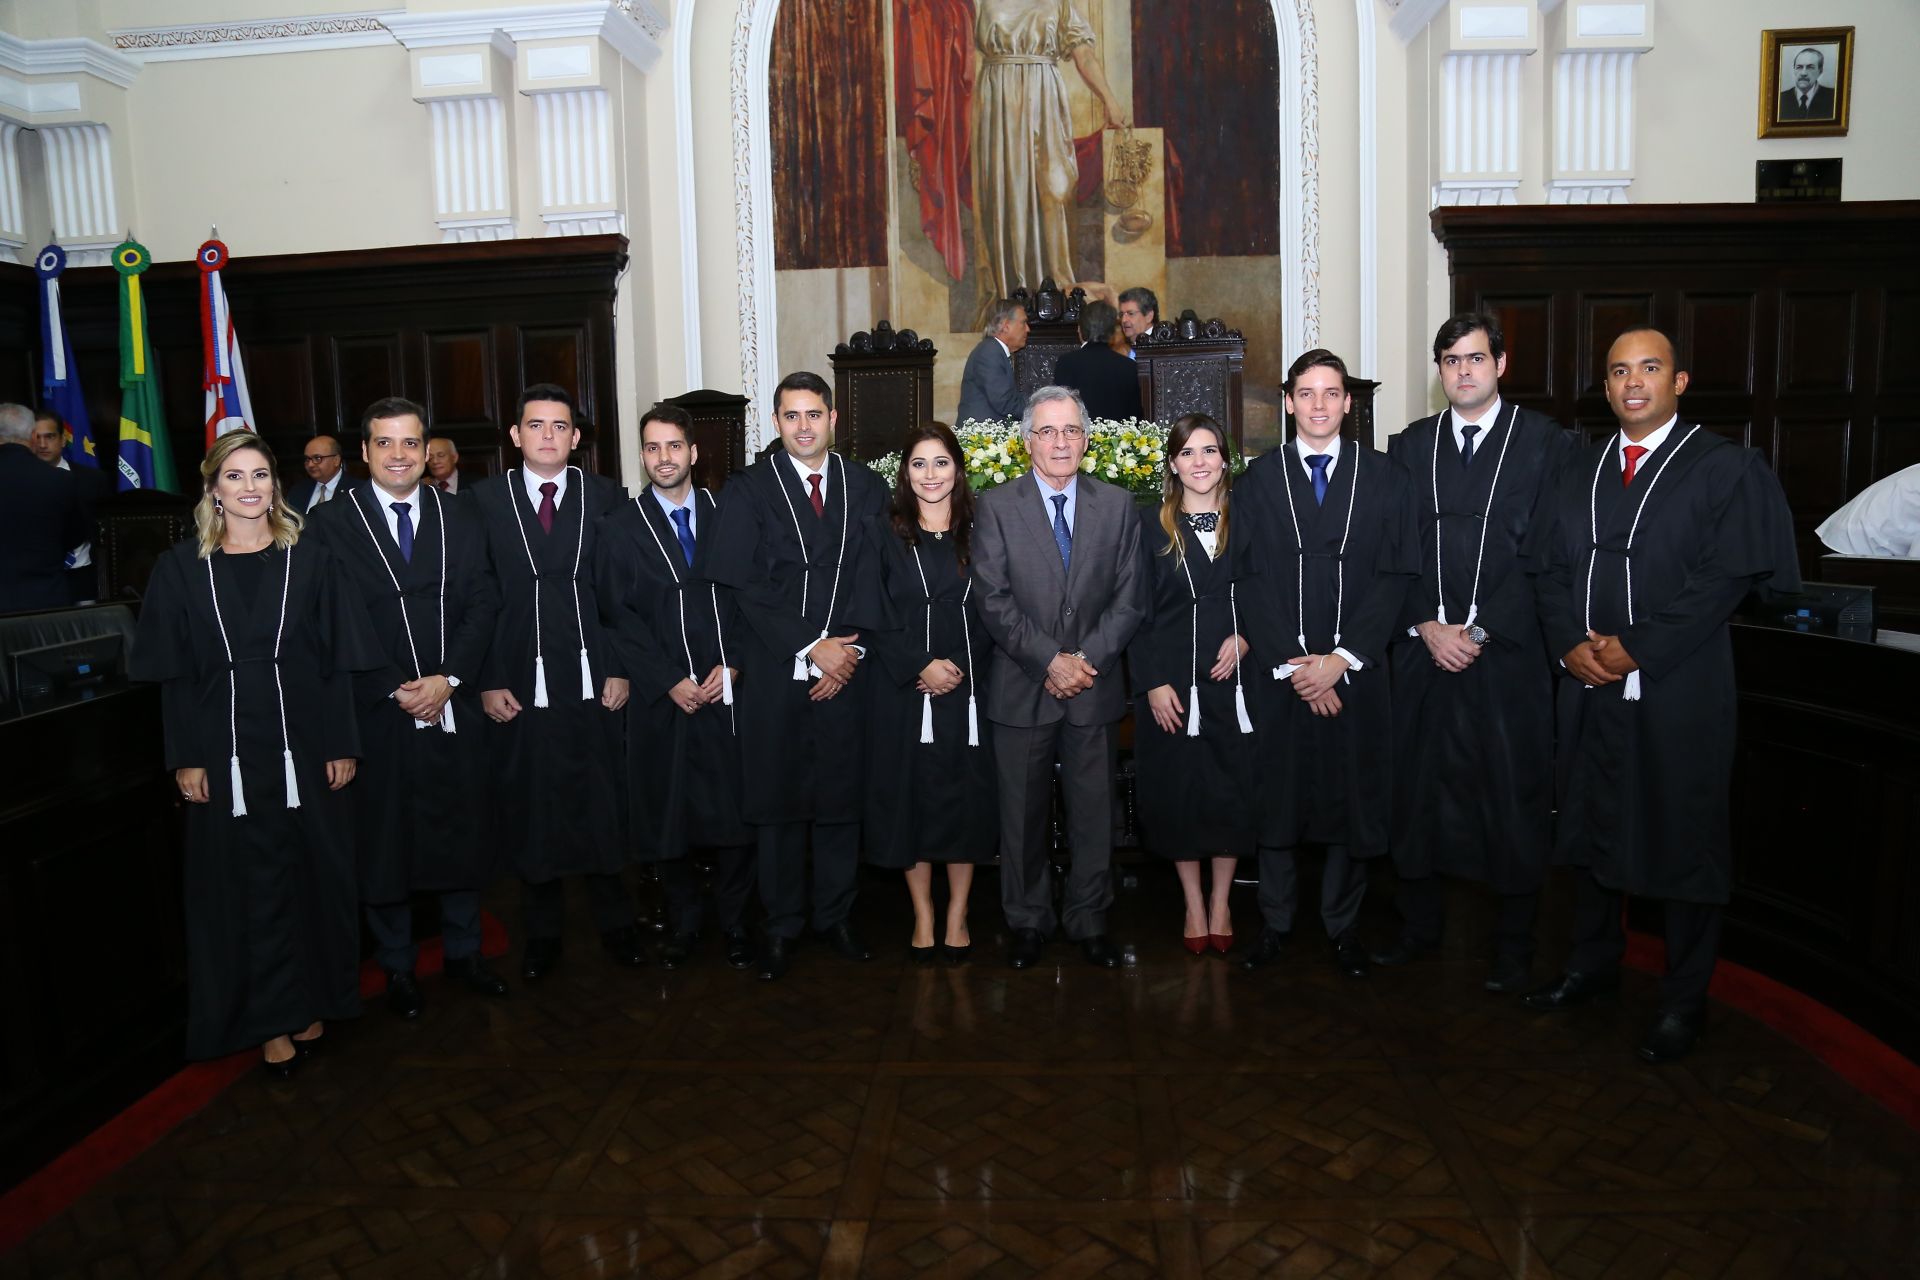 Novos juízes com o desembargador Leopoldo Raposo